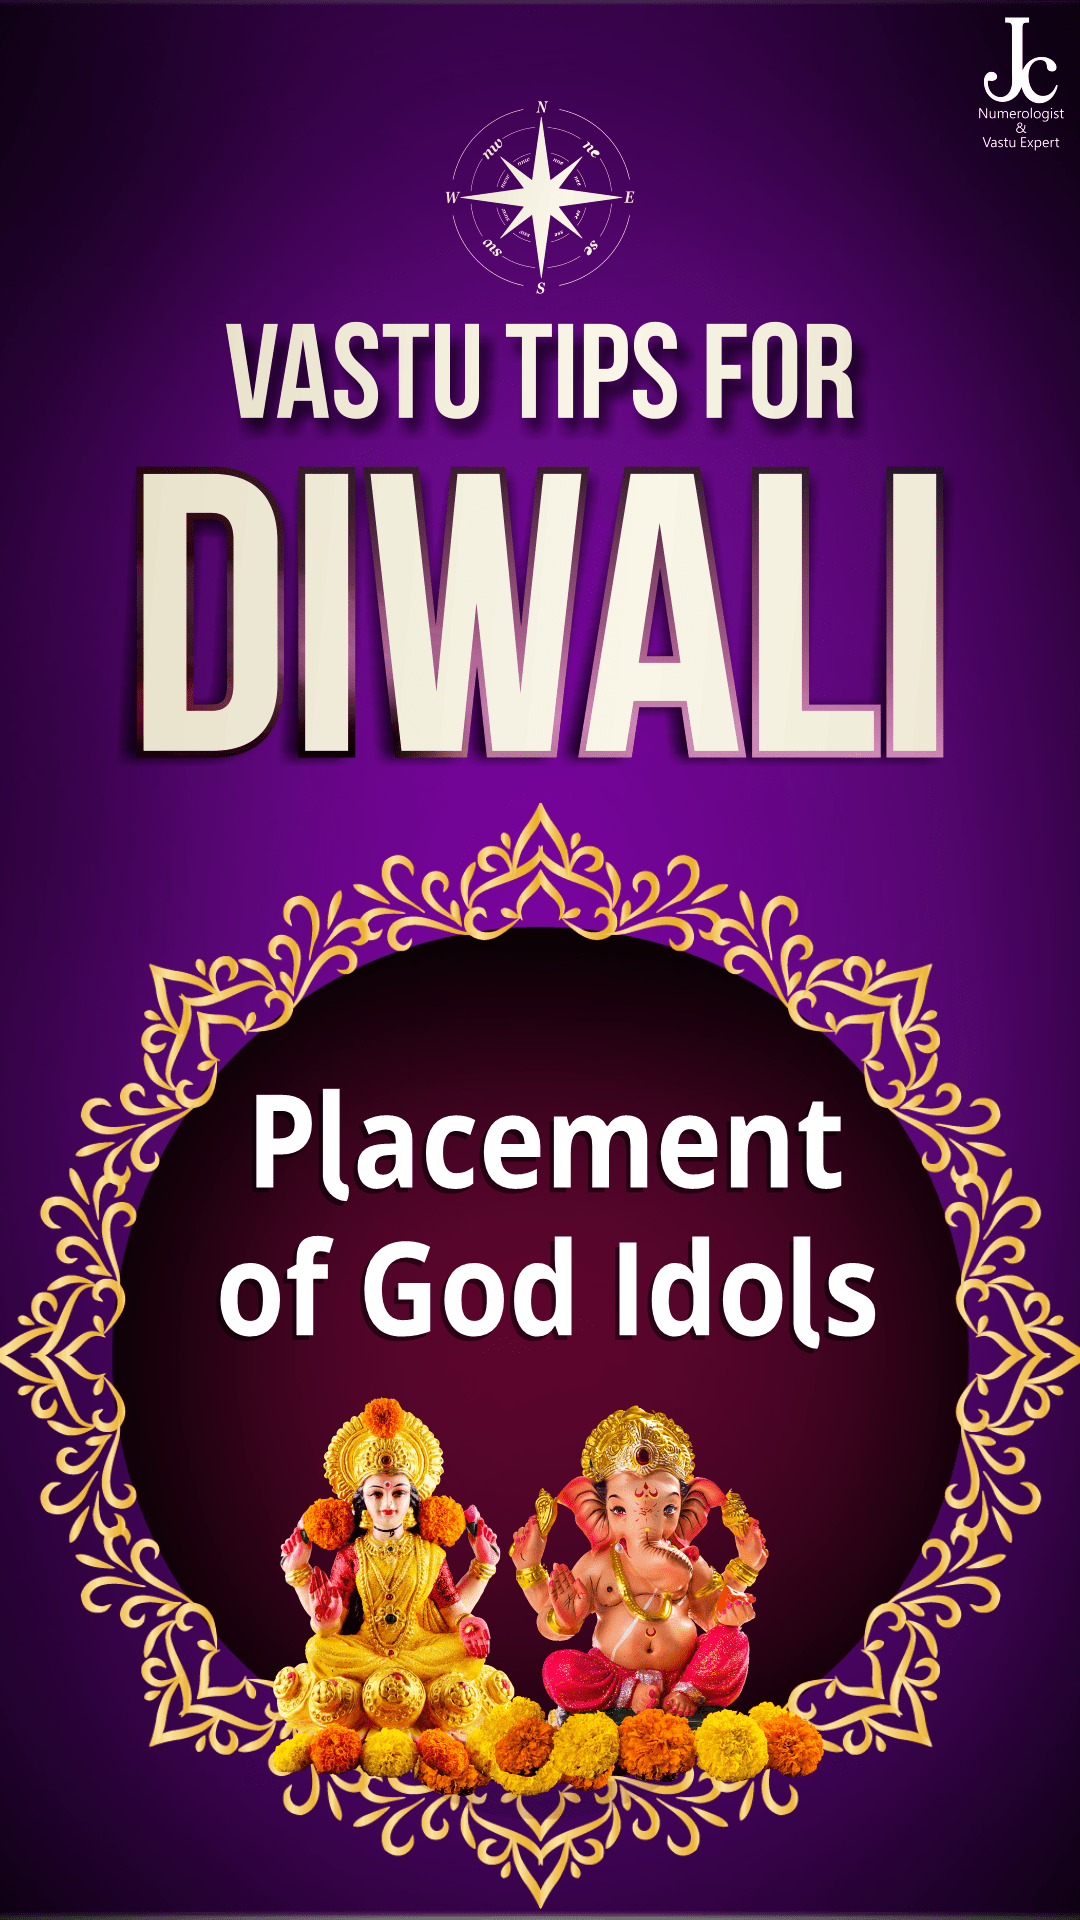 Vastu placement of God Idols